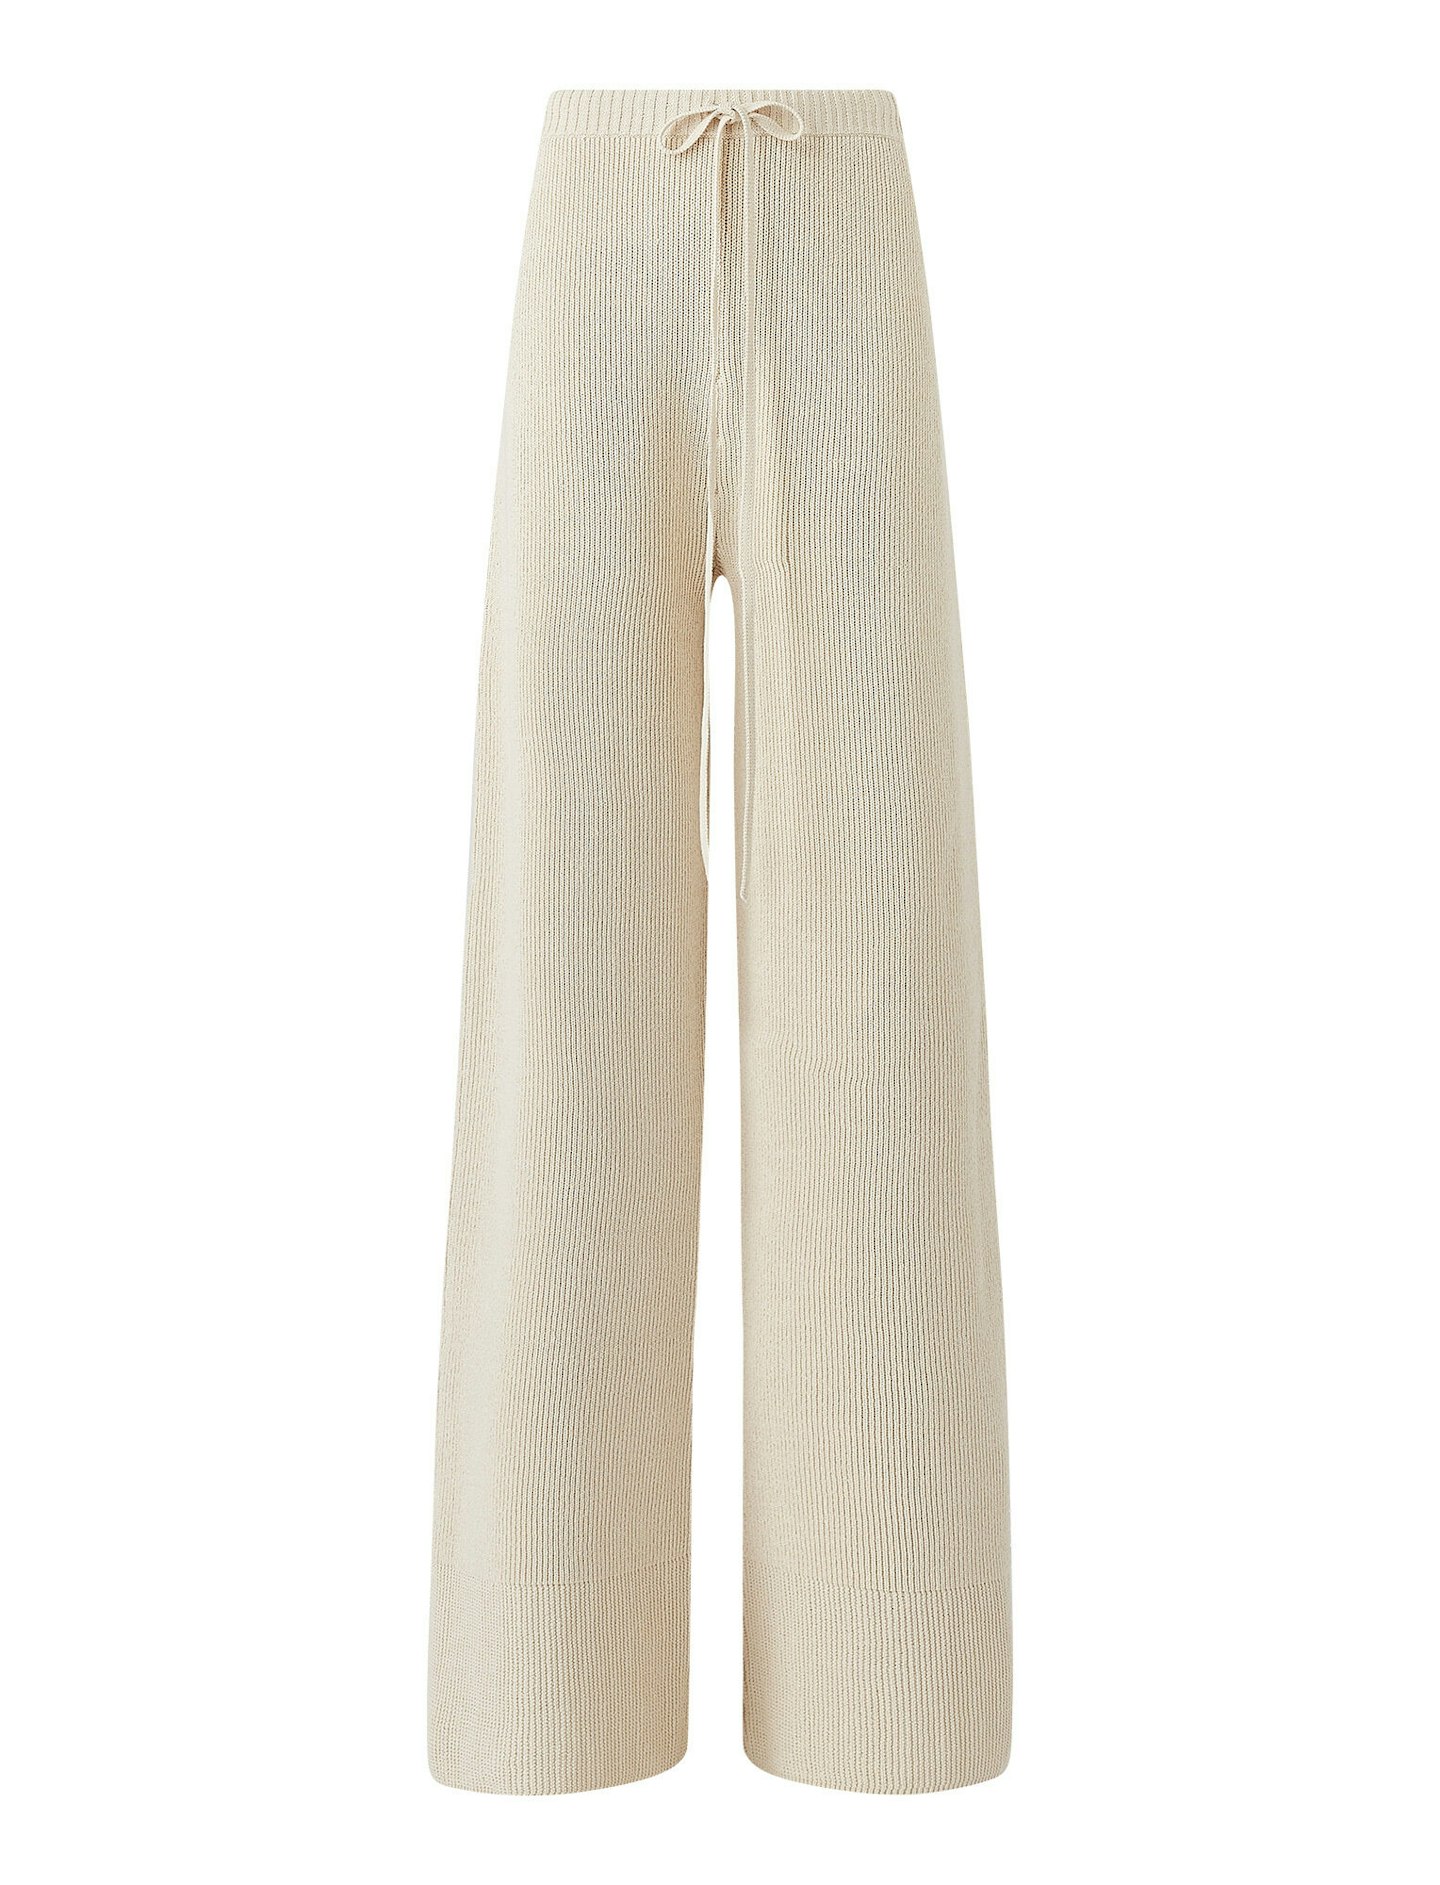 Joseph, Crispy Cotton Trousers, £395